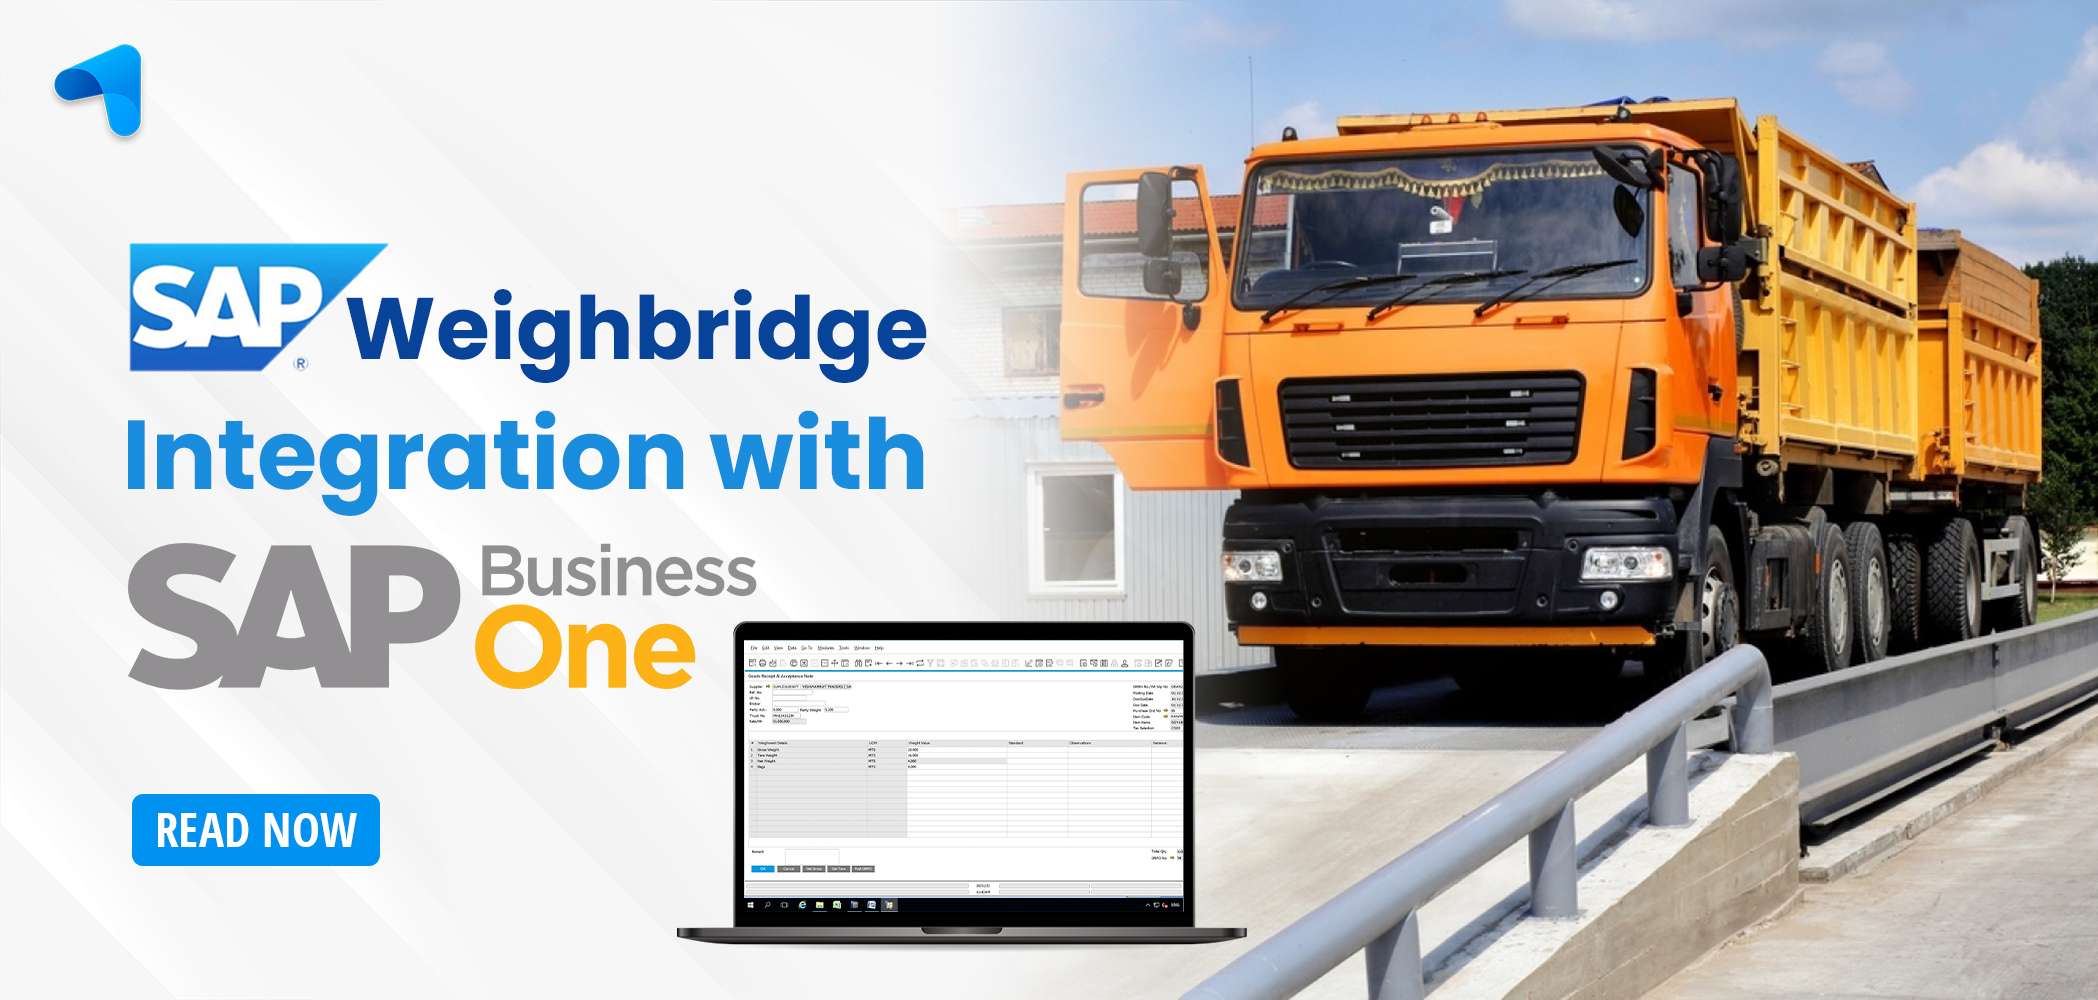 SAP-Weighbridge